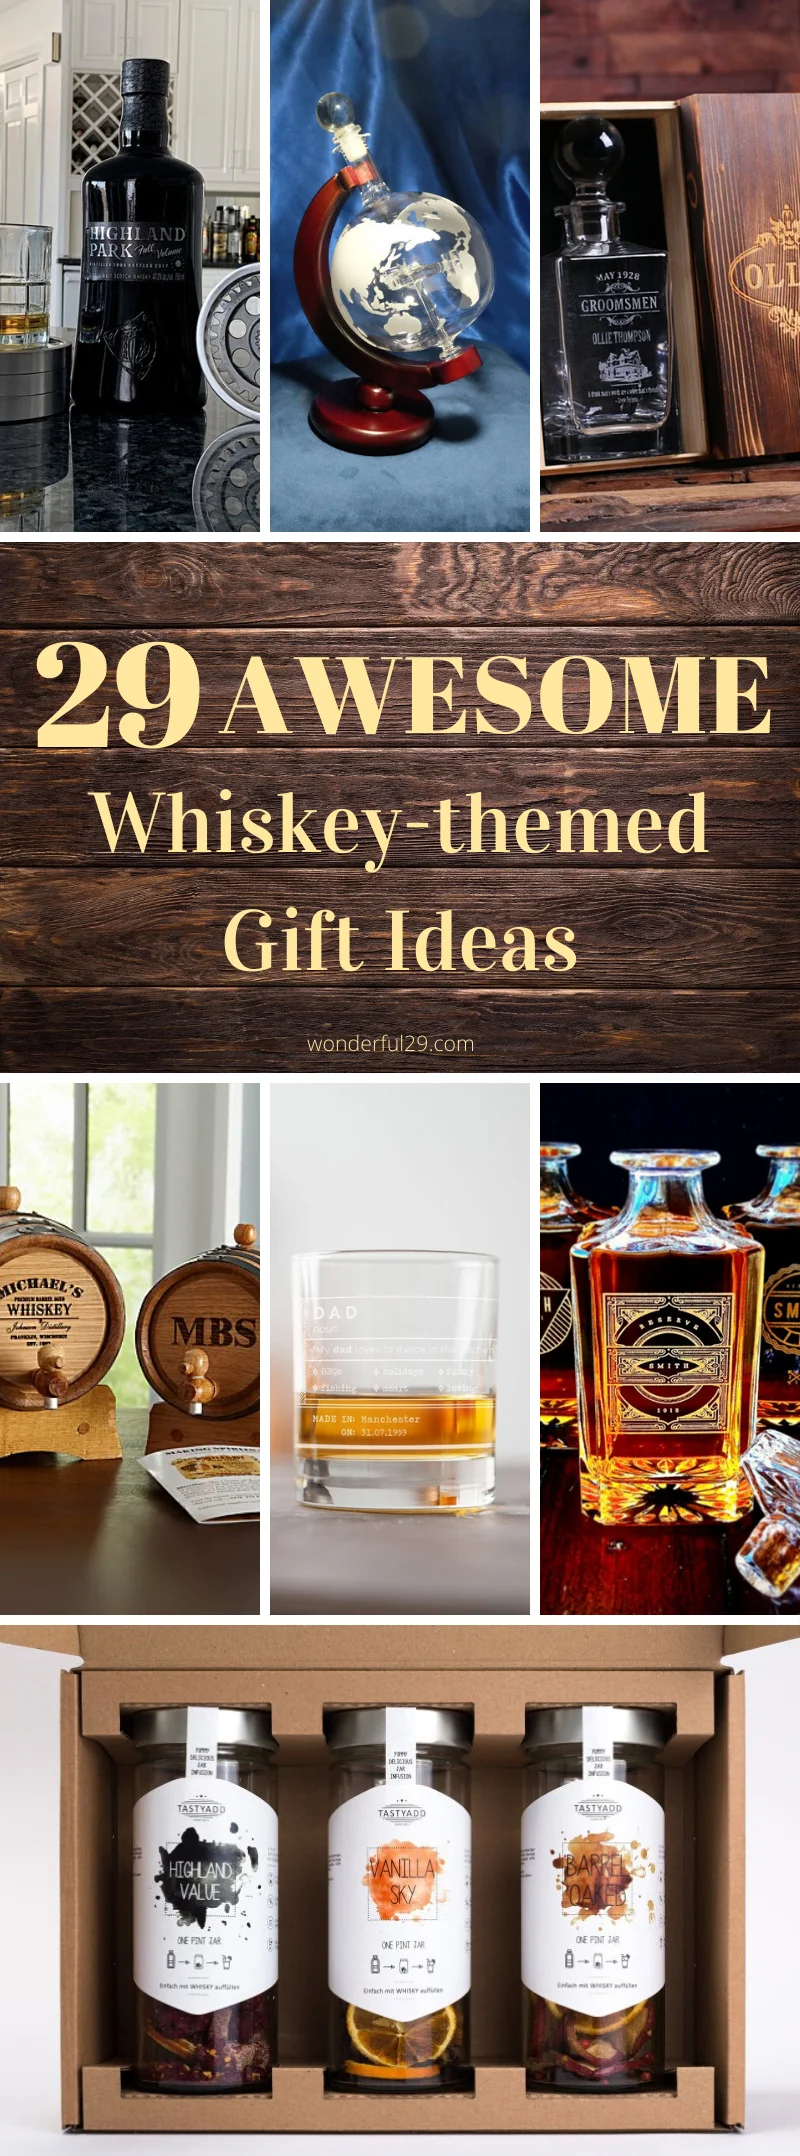 WhiskeyGlasses & Stones Unique 10 Piece Gift Set in Gift Box - Vintage  Gentlemen